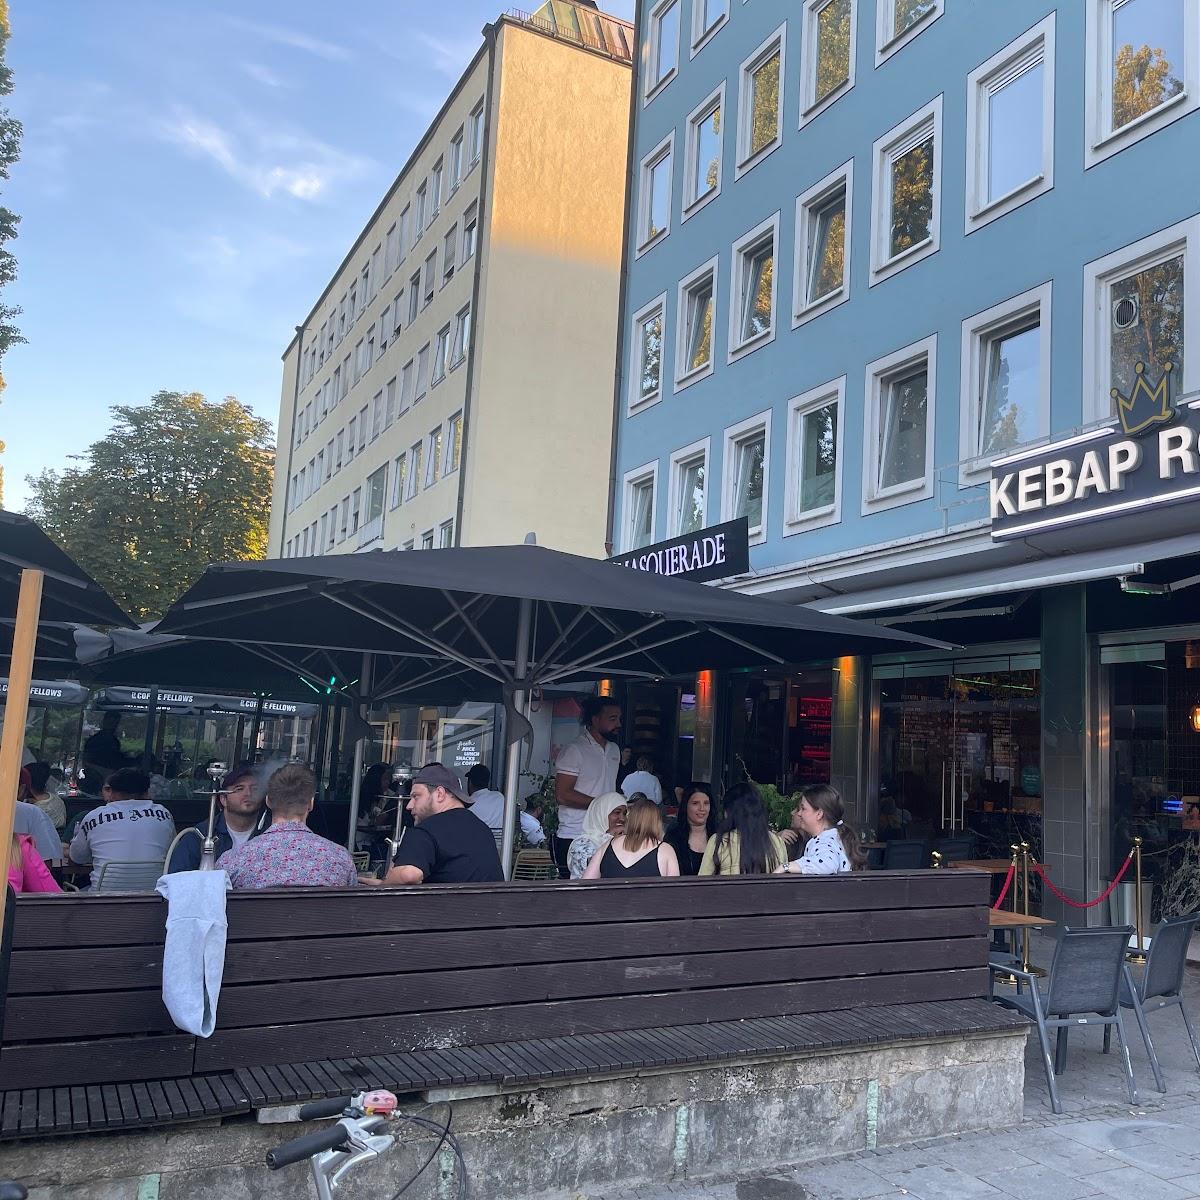 Restaurant "Kebap Royal" in München